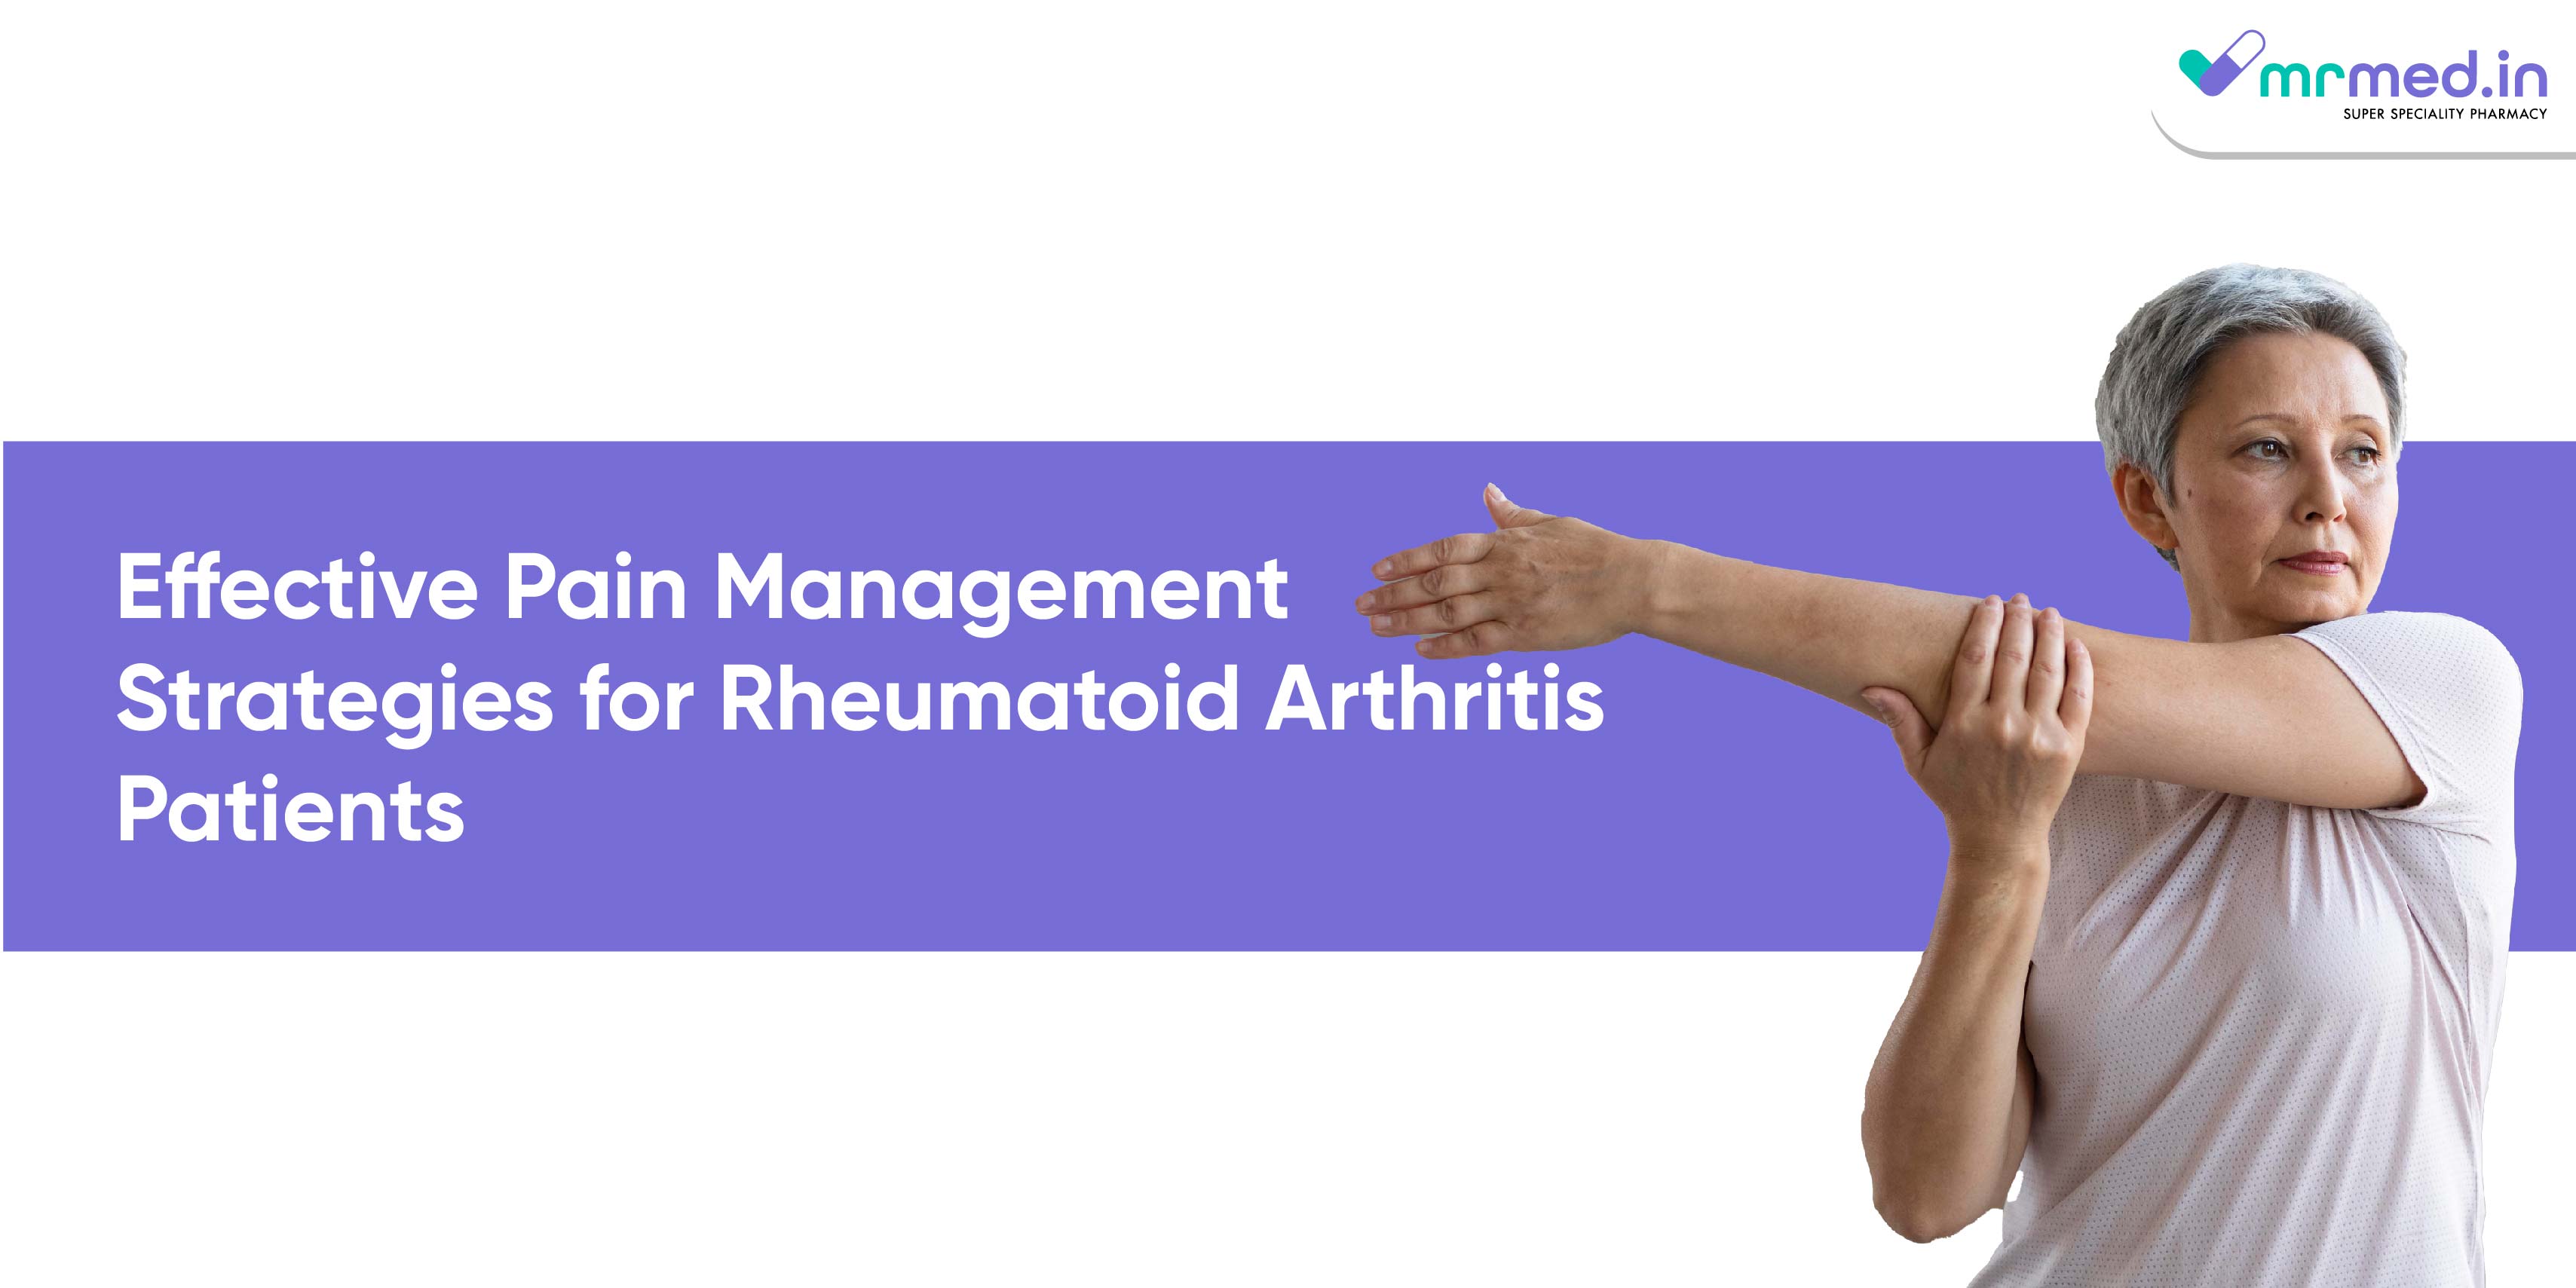 Effective Pain Management Strategies for Rheumatoid Arthritis Patients